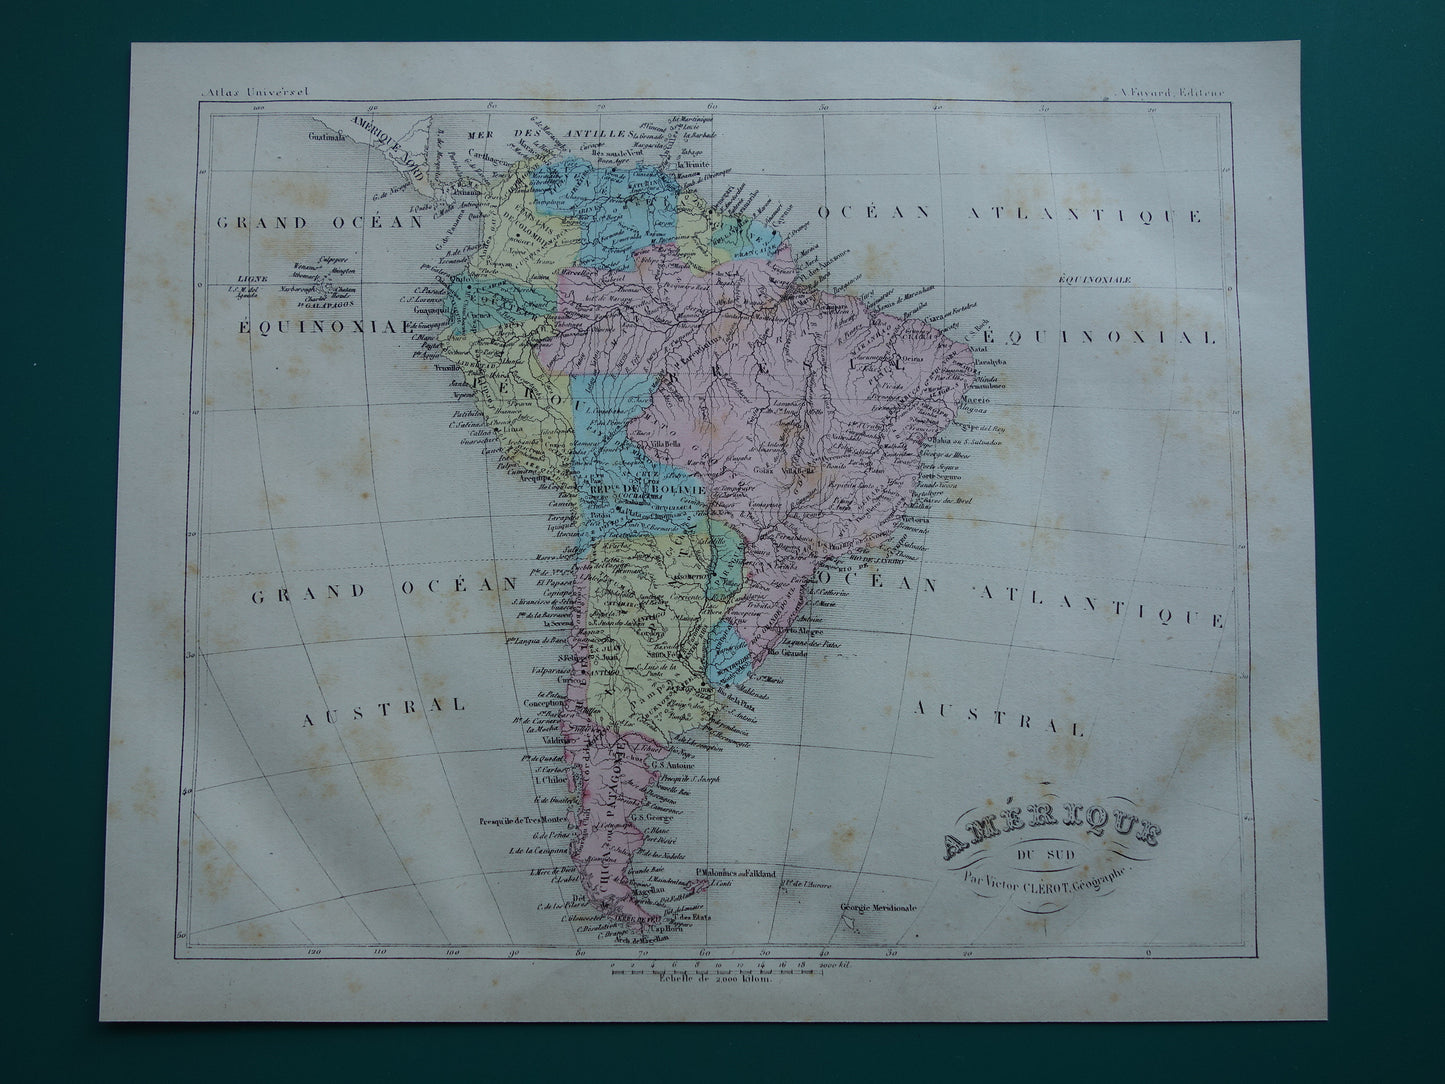 ZUID-AMERIKA Oude kaart van Brazilië Argentinië Patagonië Originele antieke handgekleurde landkaart continent